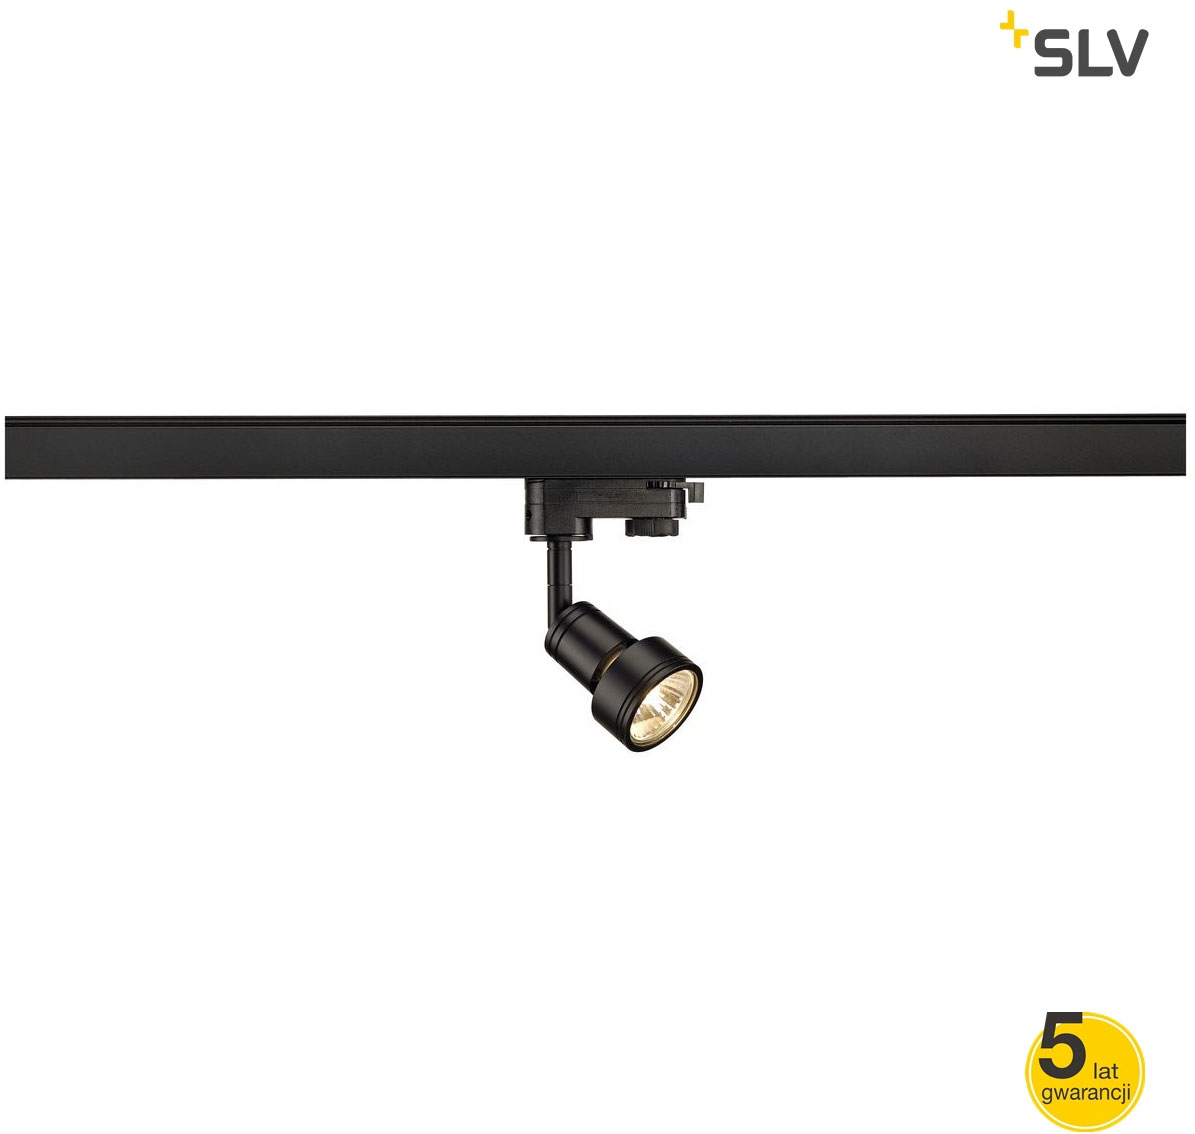 SLV 153560 PURI lamp czarna GU10 max. 50W zawiera 3-F Adapter oprawa 1-fazowy